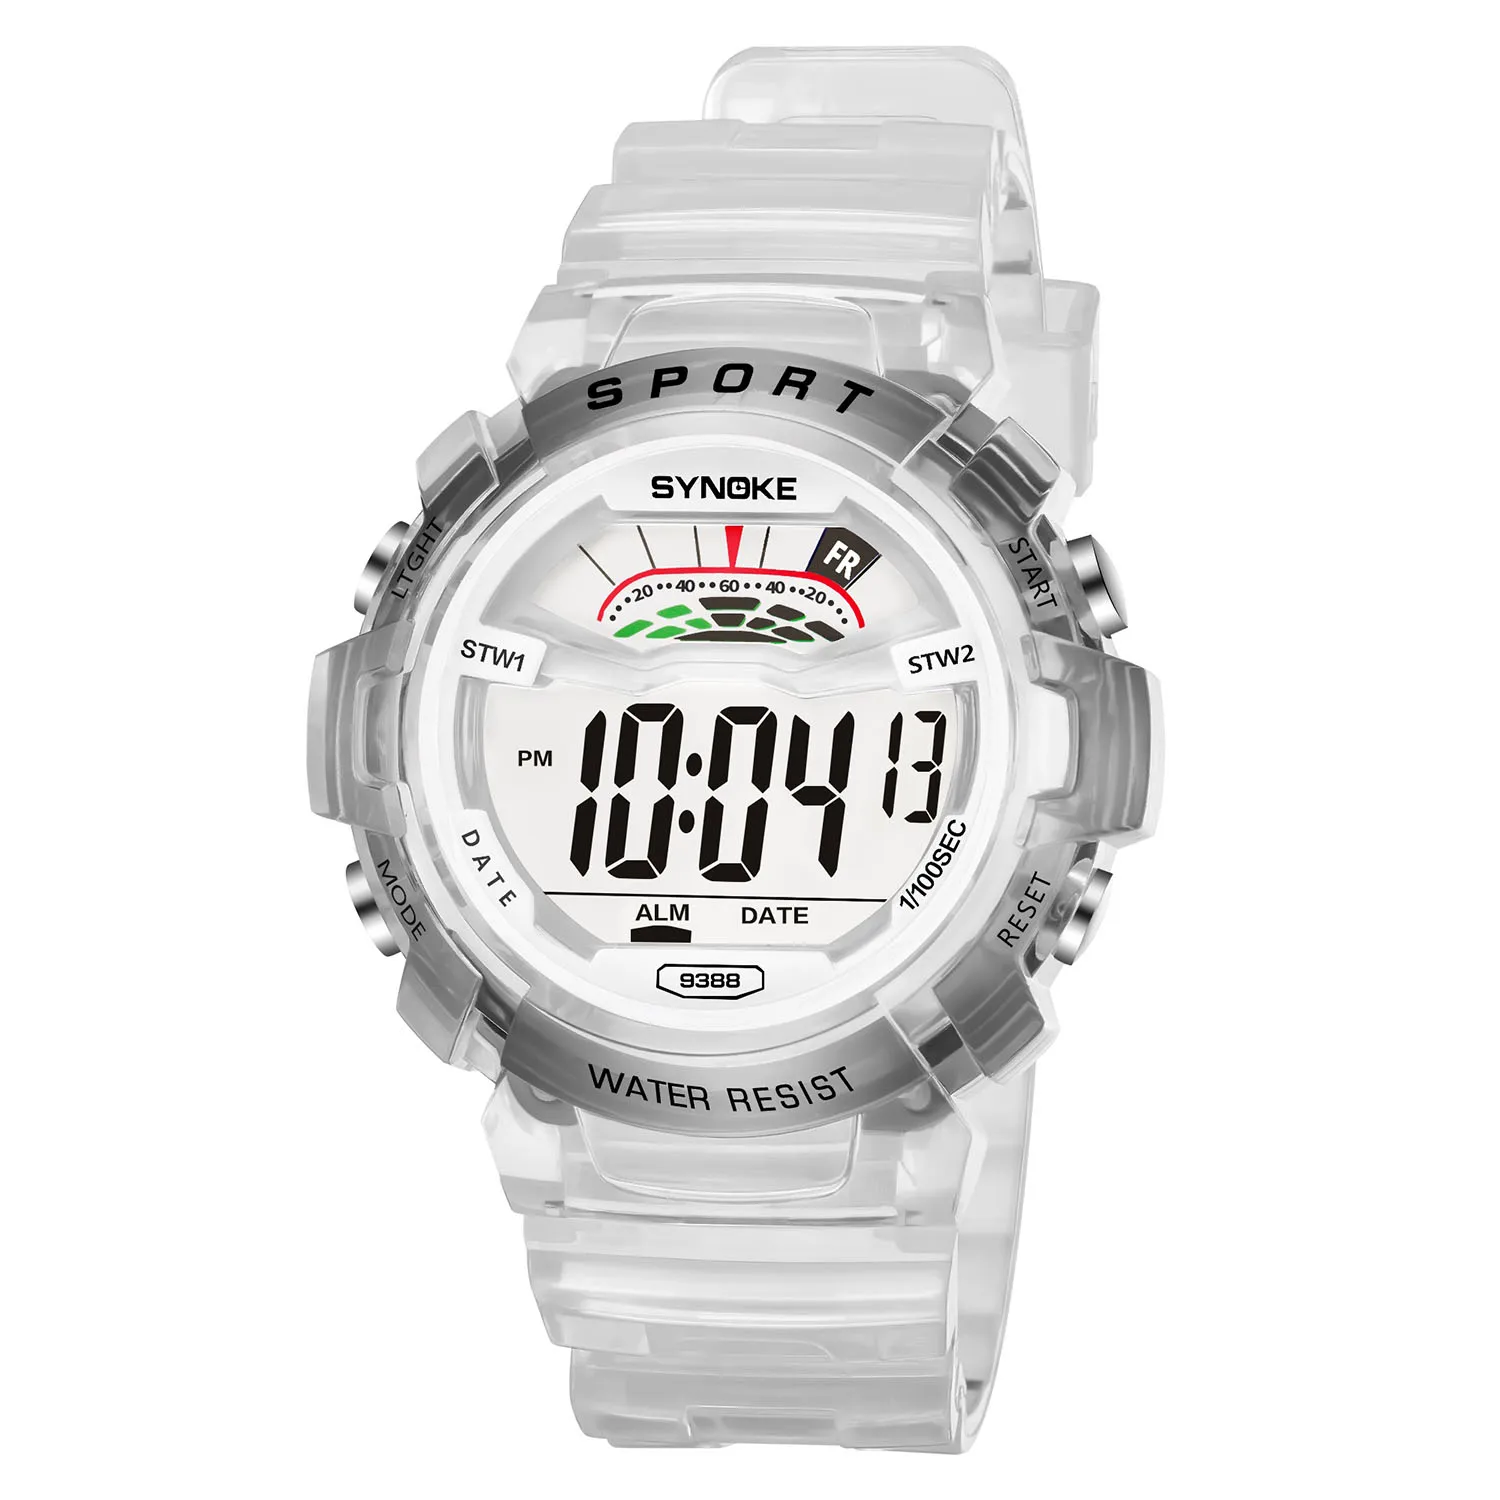 Men Women Digital Watches Fashion led Waterproof Sport Watch Kids g style Shock Children's Electronic Clock Wristwatch gift relo enlarge